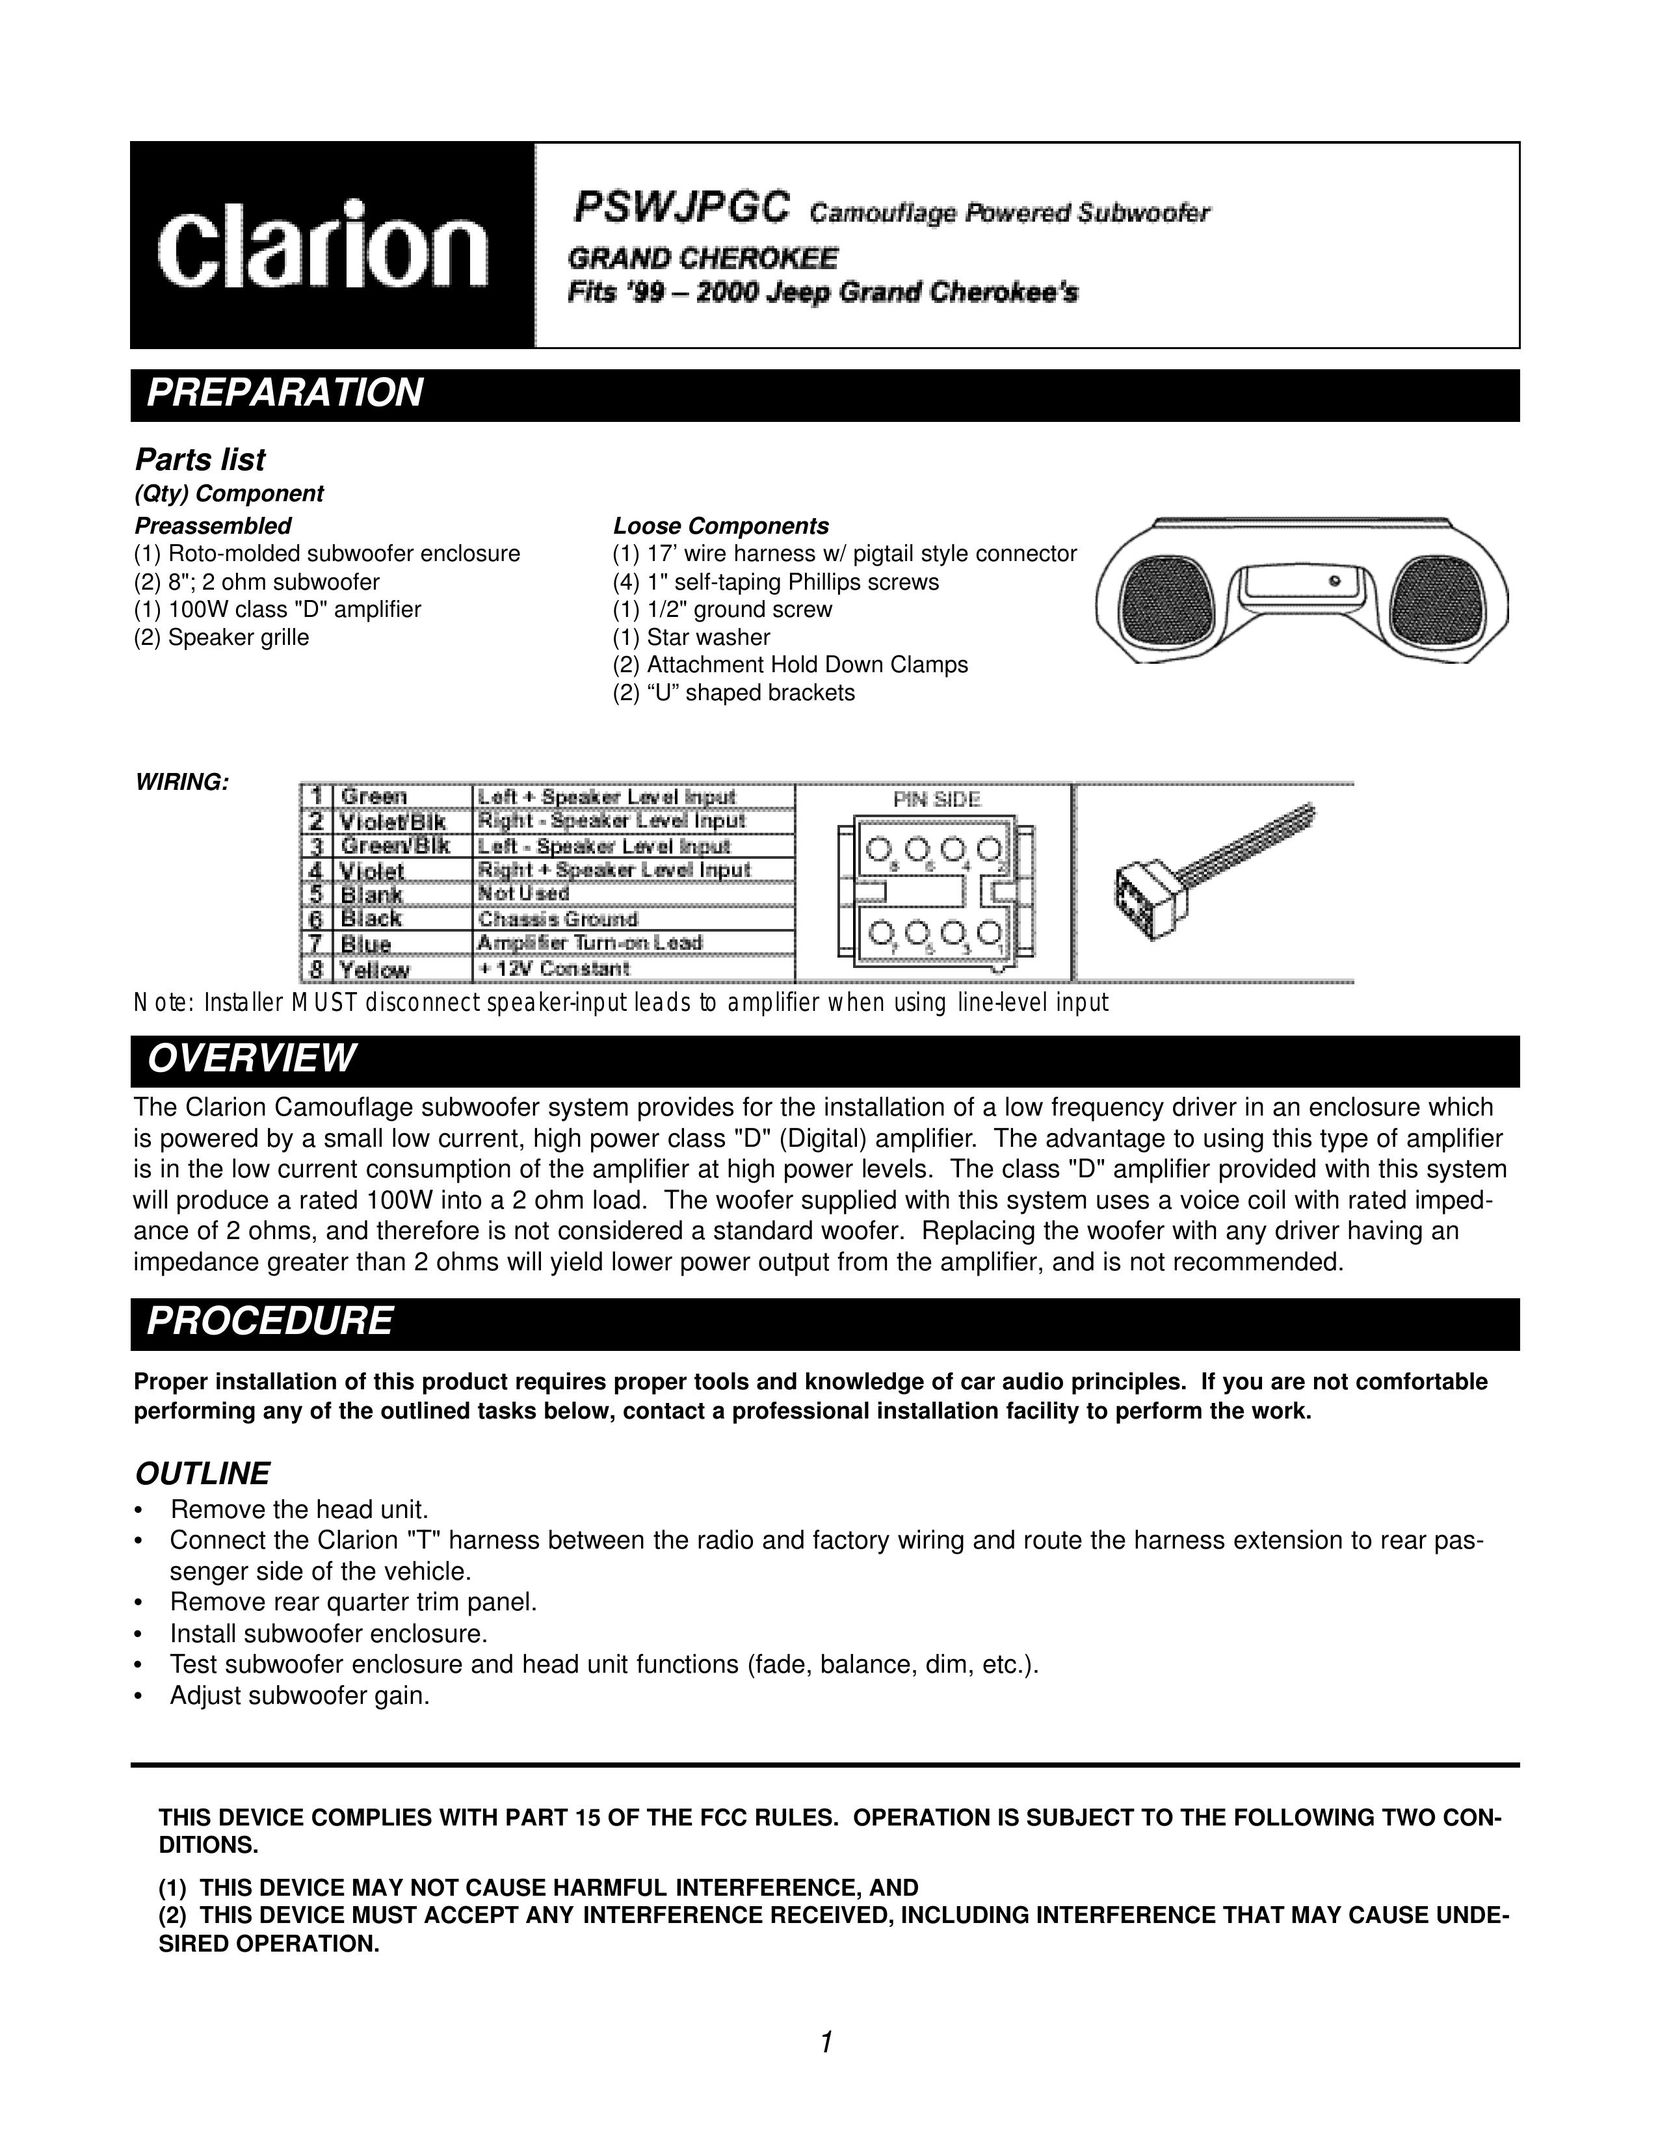 Clarion PSWJPGC Speaker User Manual